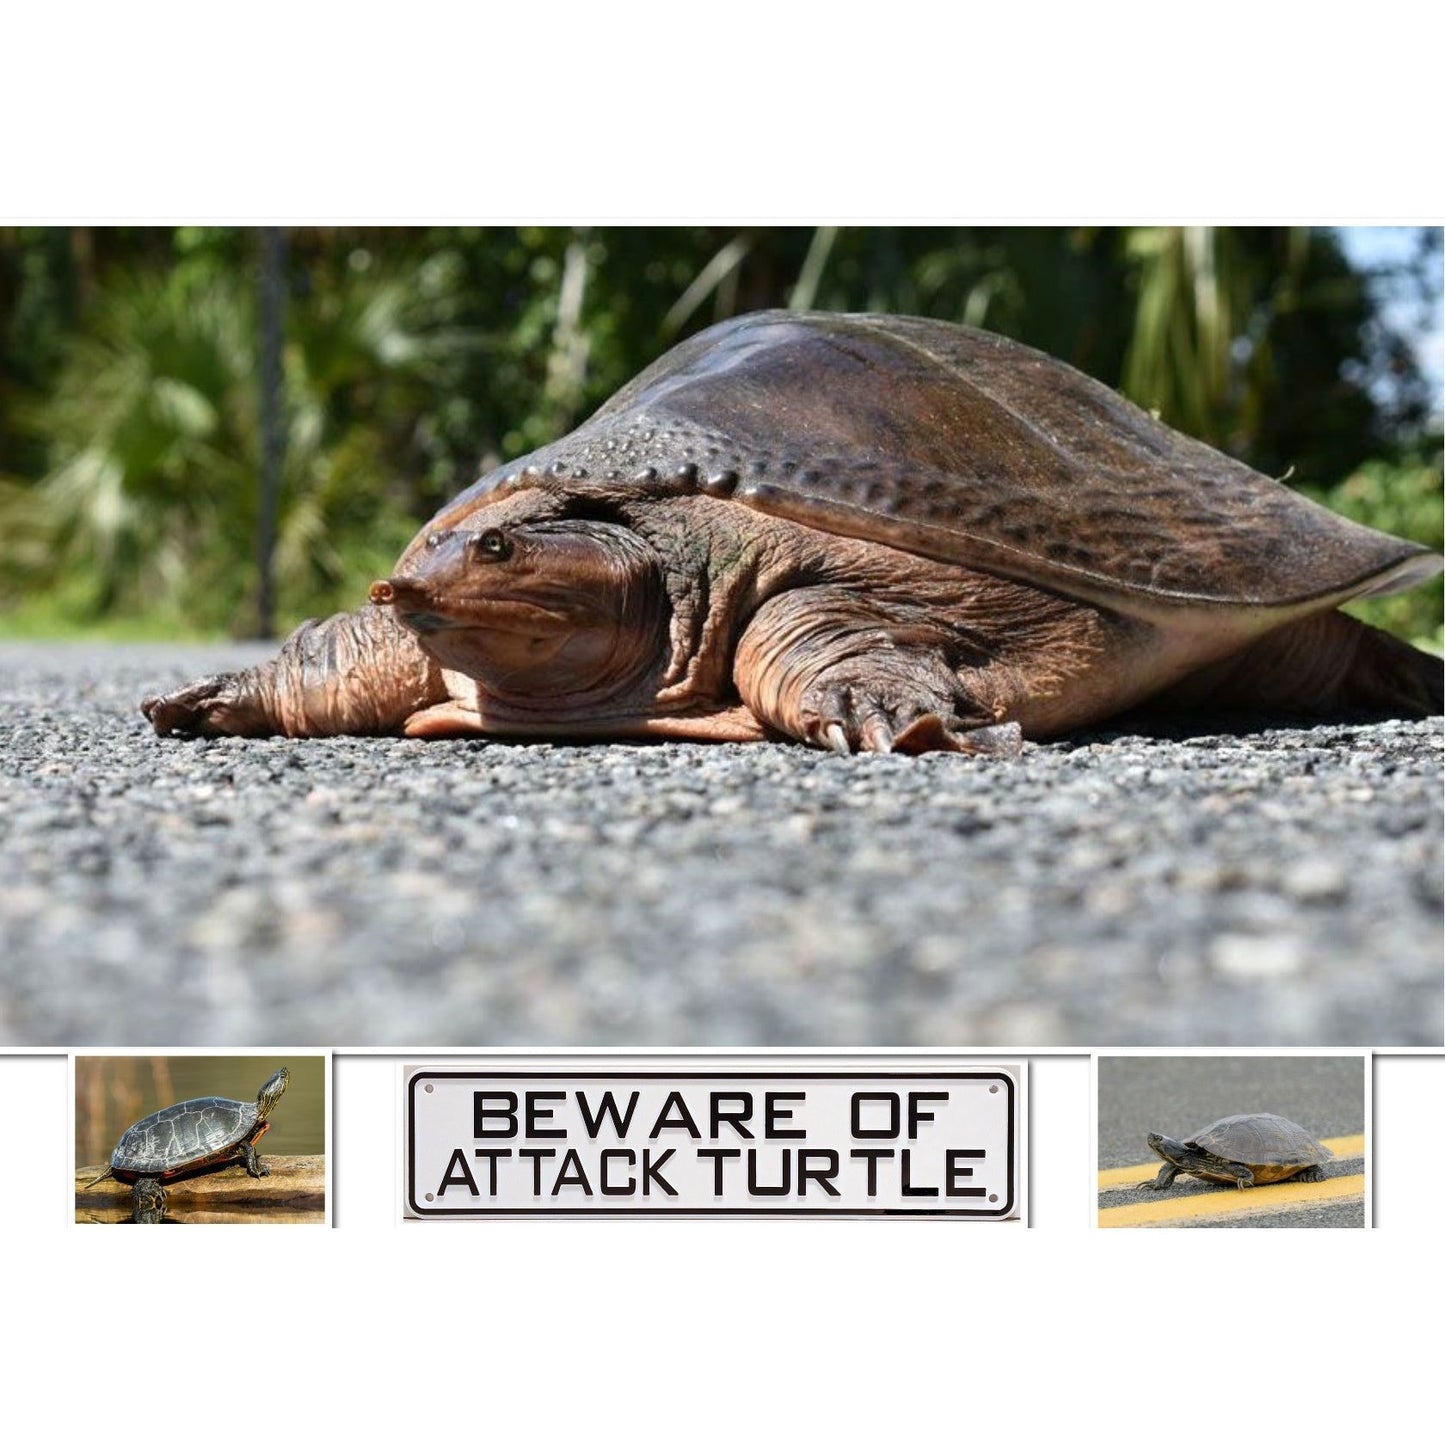 Beware of Attack Turtle Sign Solid Plastic 12 X 3